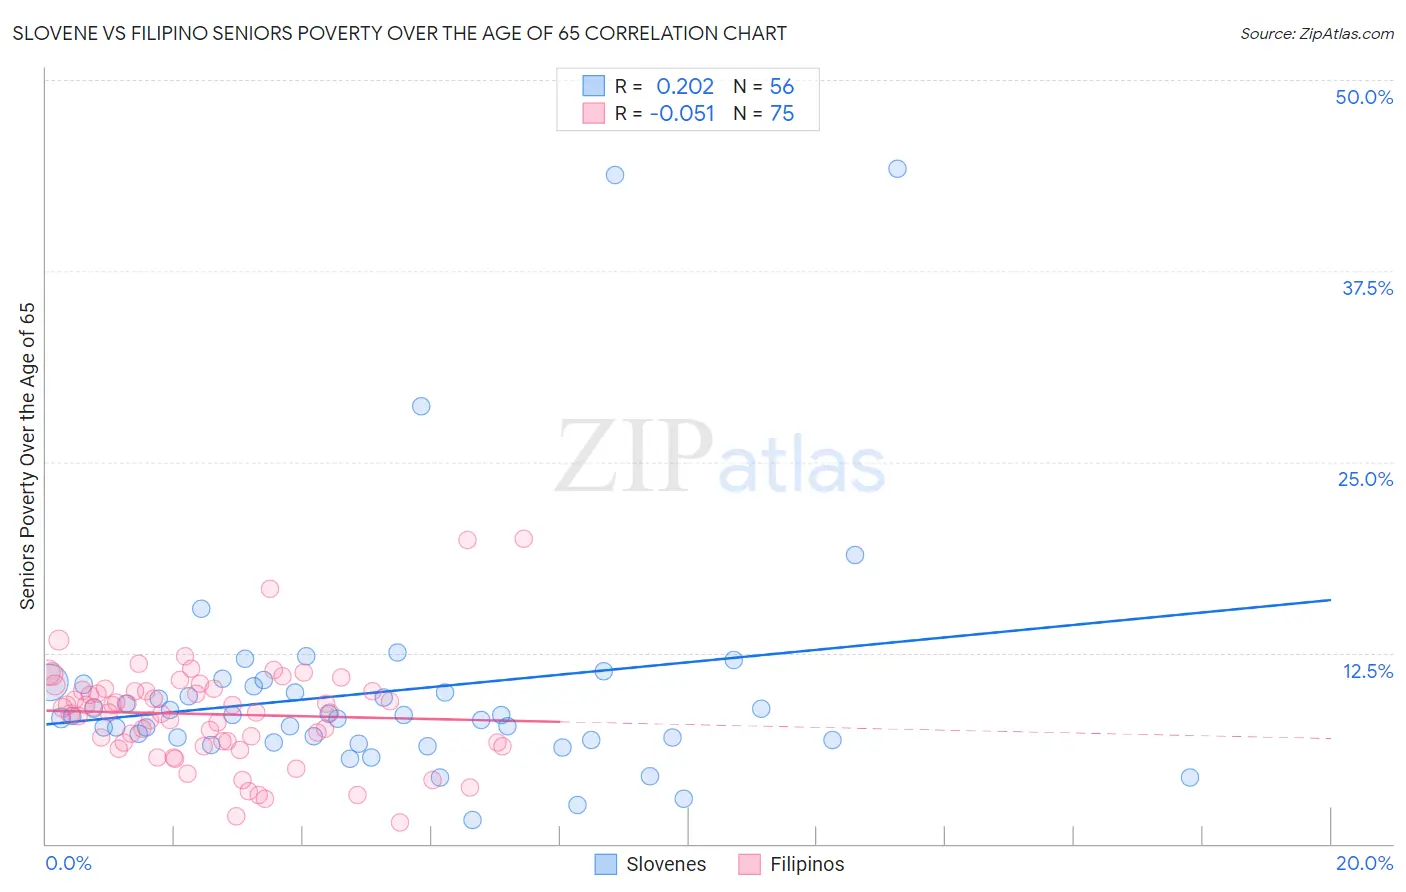 Slovene vs Filipino Seniors Poverty Over the Age of 65